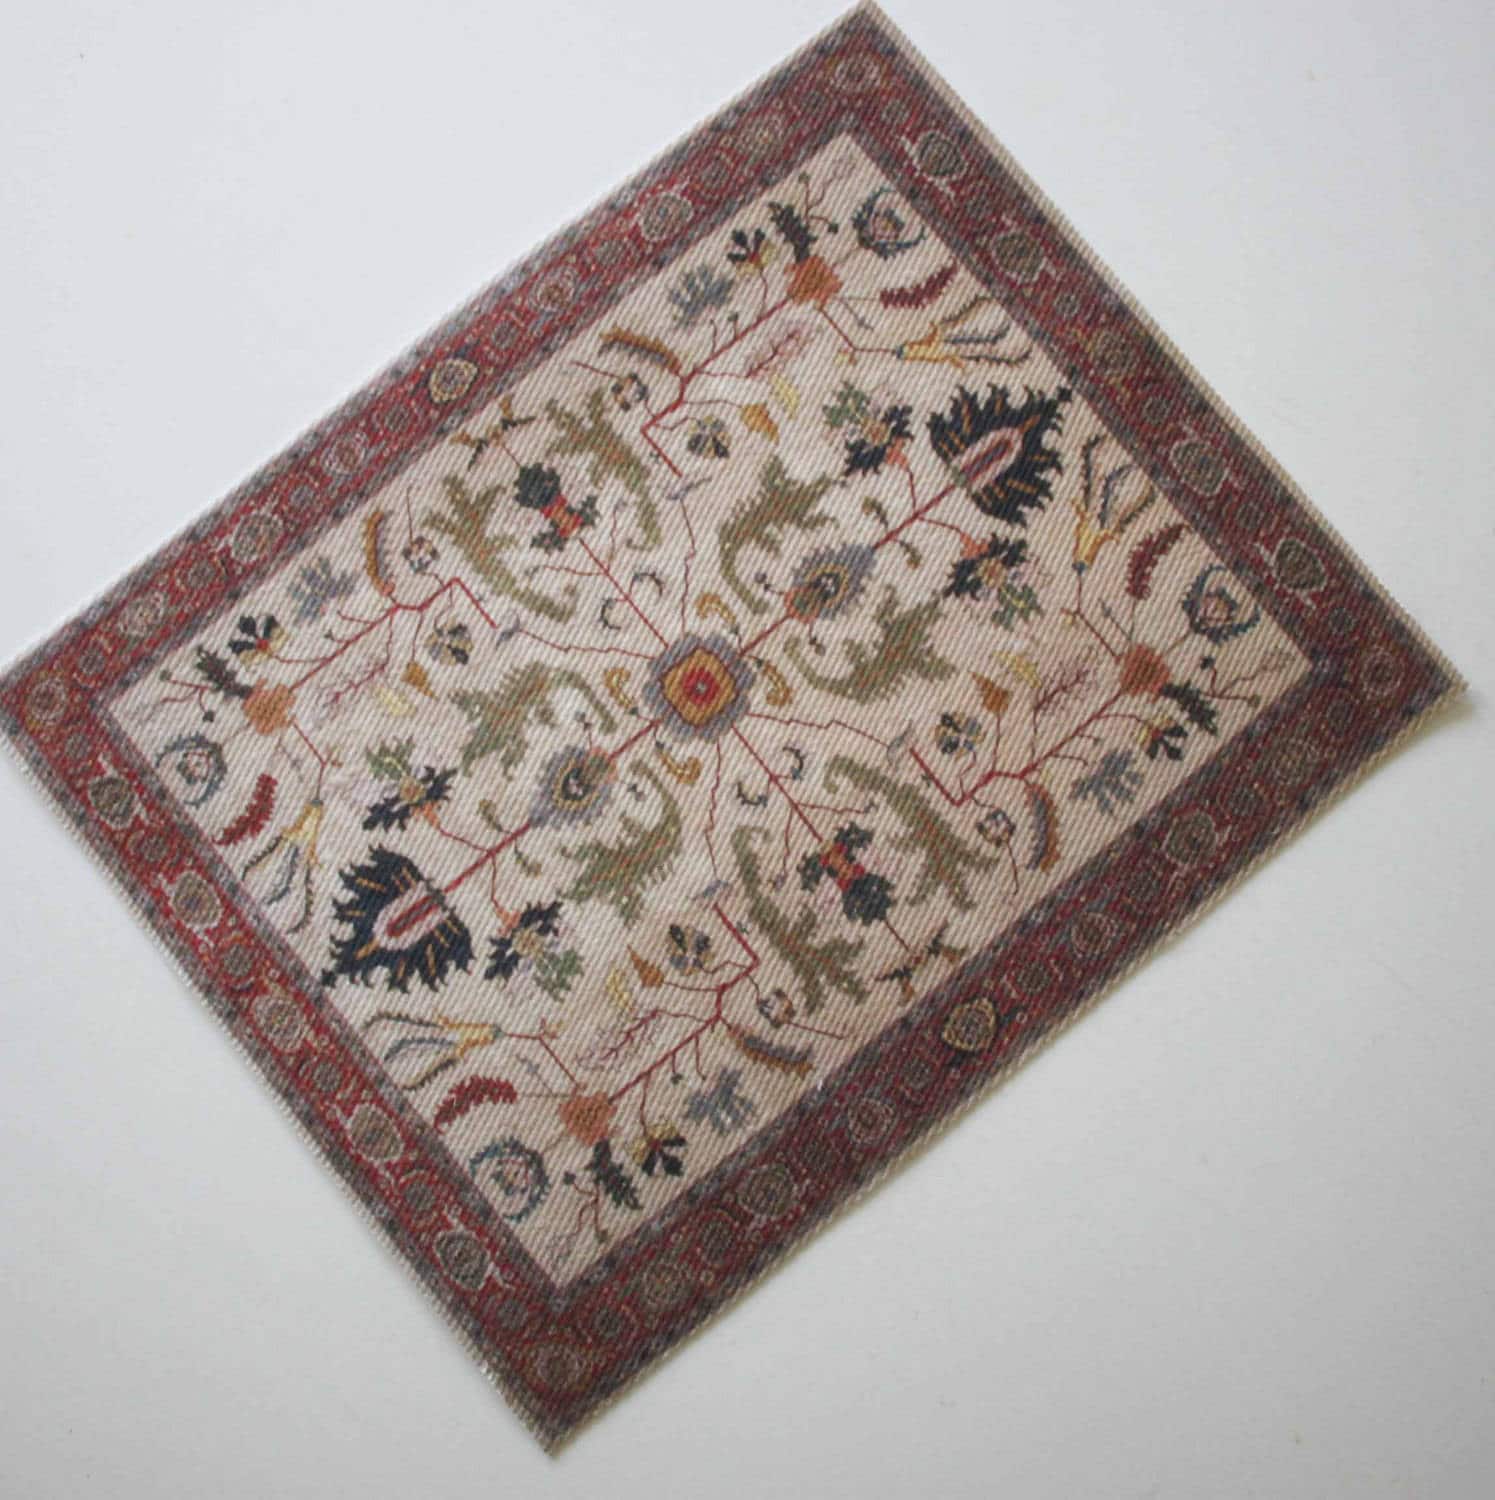 Carpet Rug Oriental Persian Design Dollhouse Miniature Art 6.3"x3.8" 1:12 Scale 